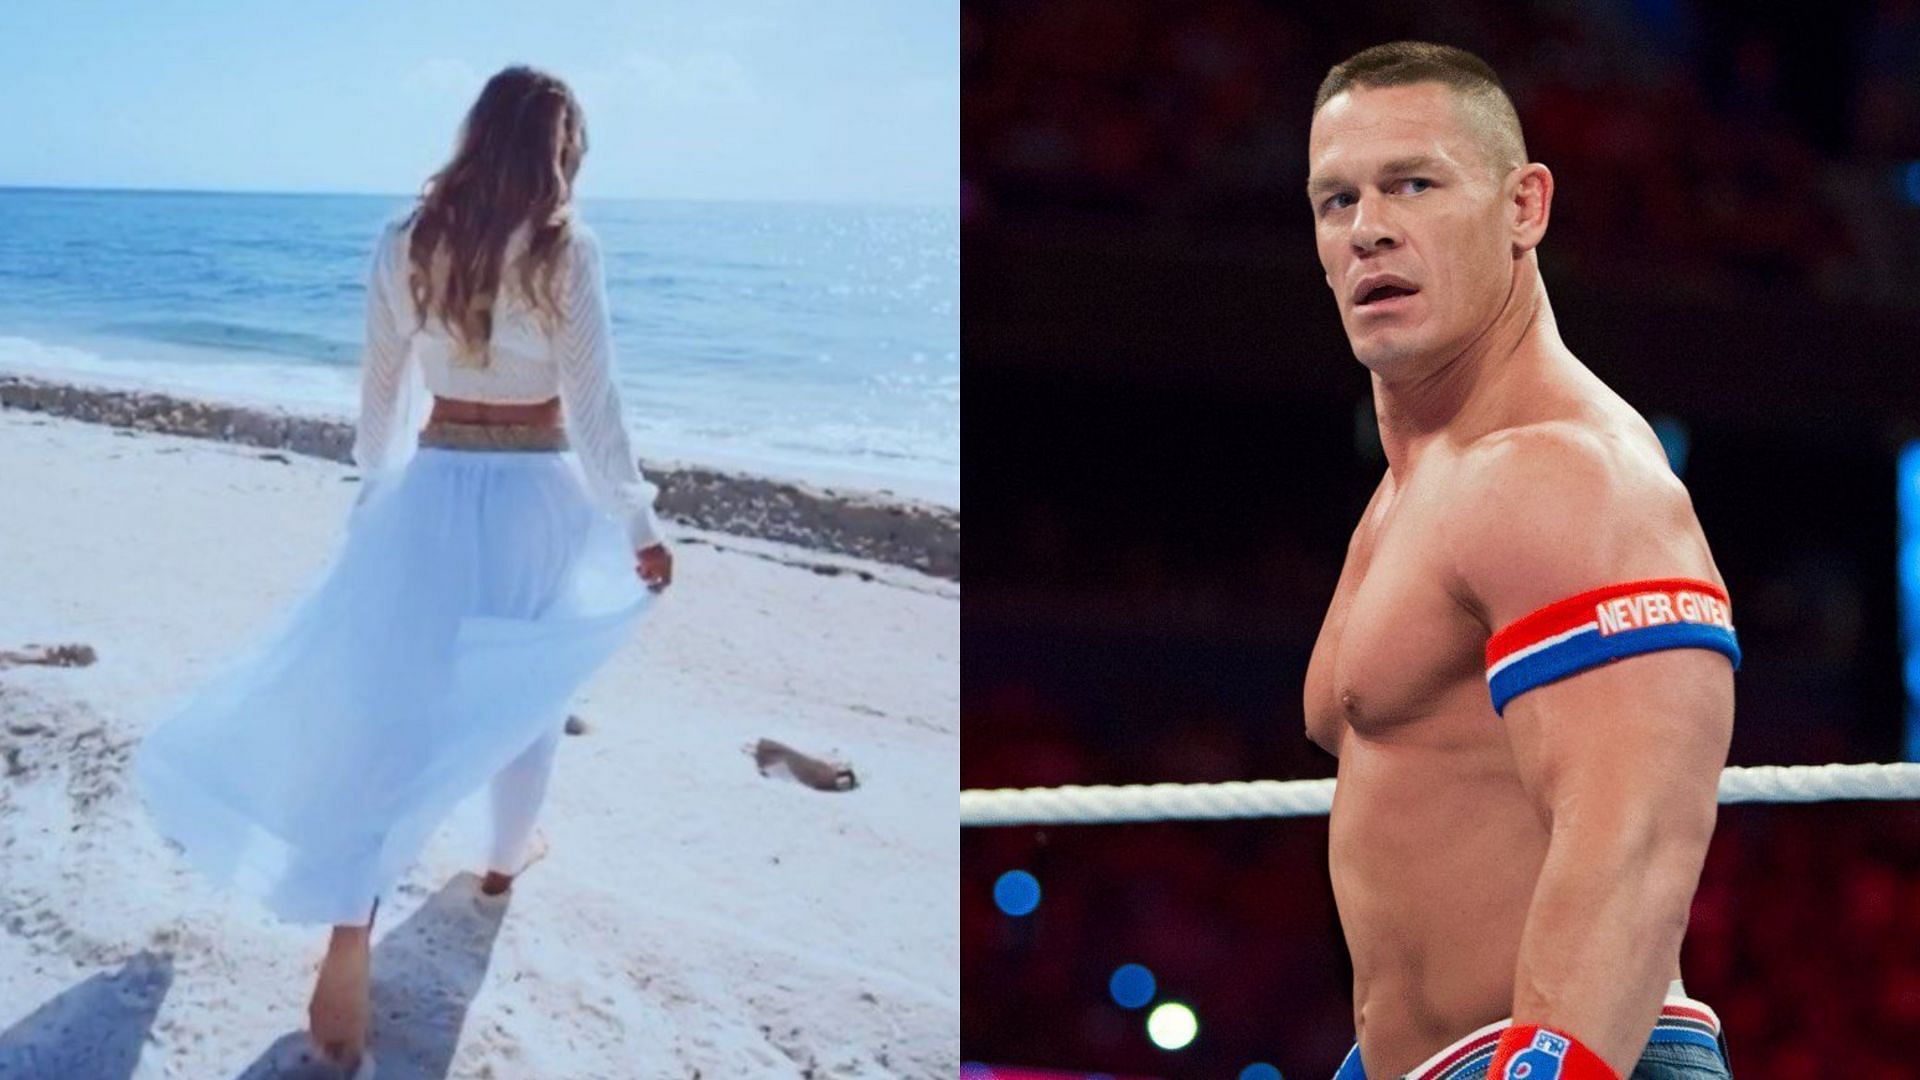 WWE Superstars Carmella (left) and John Cena (right)